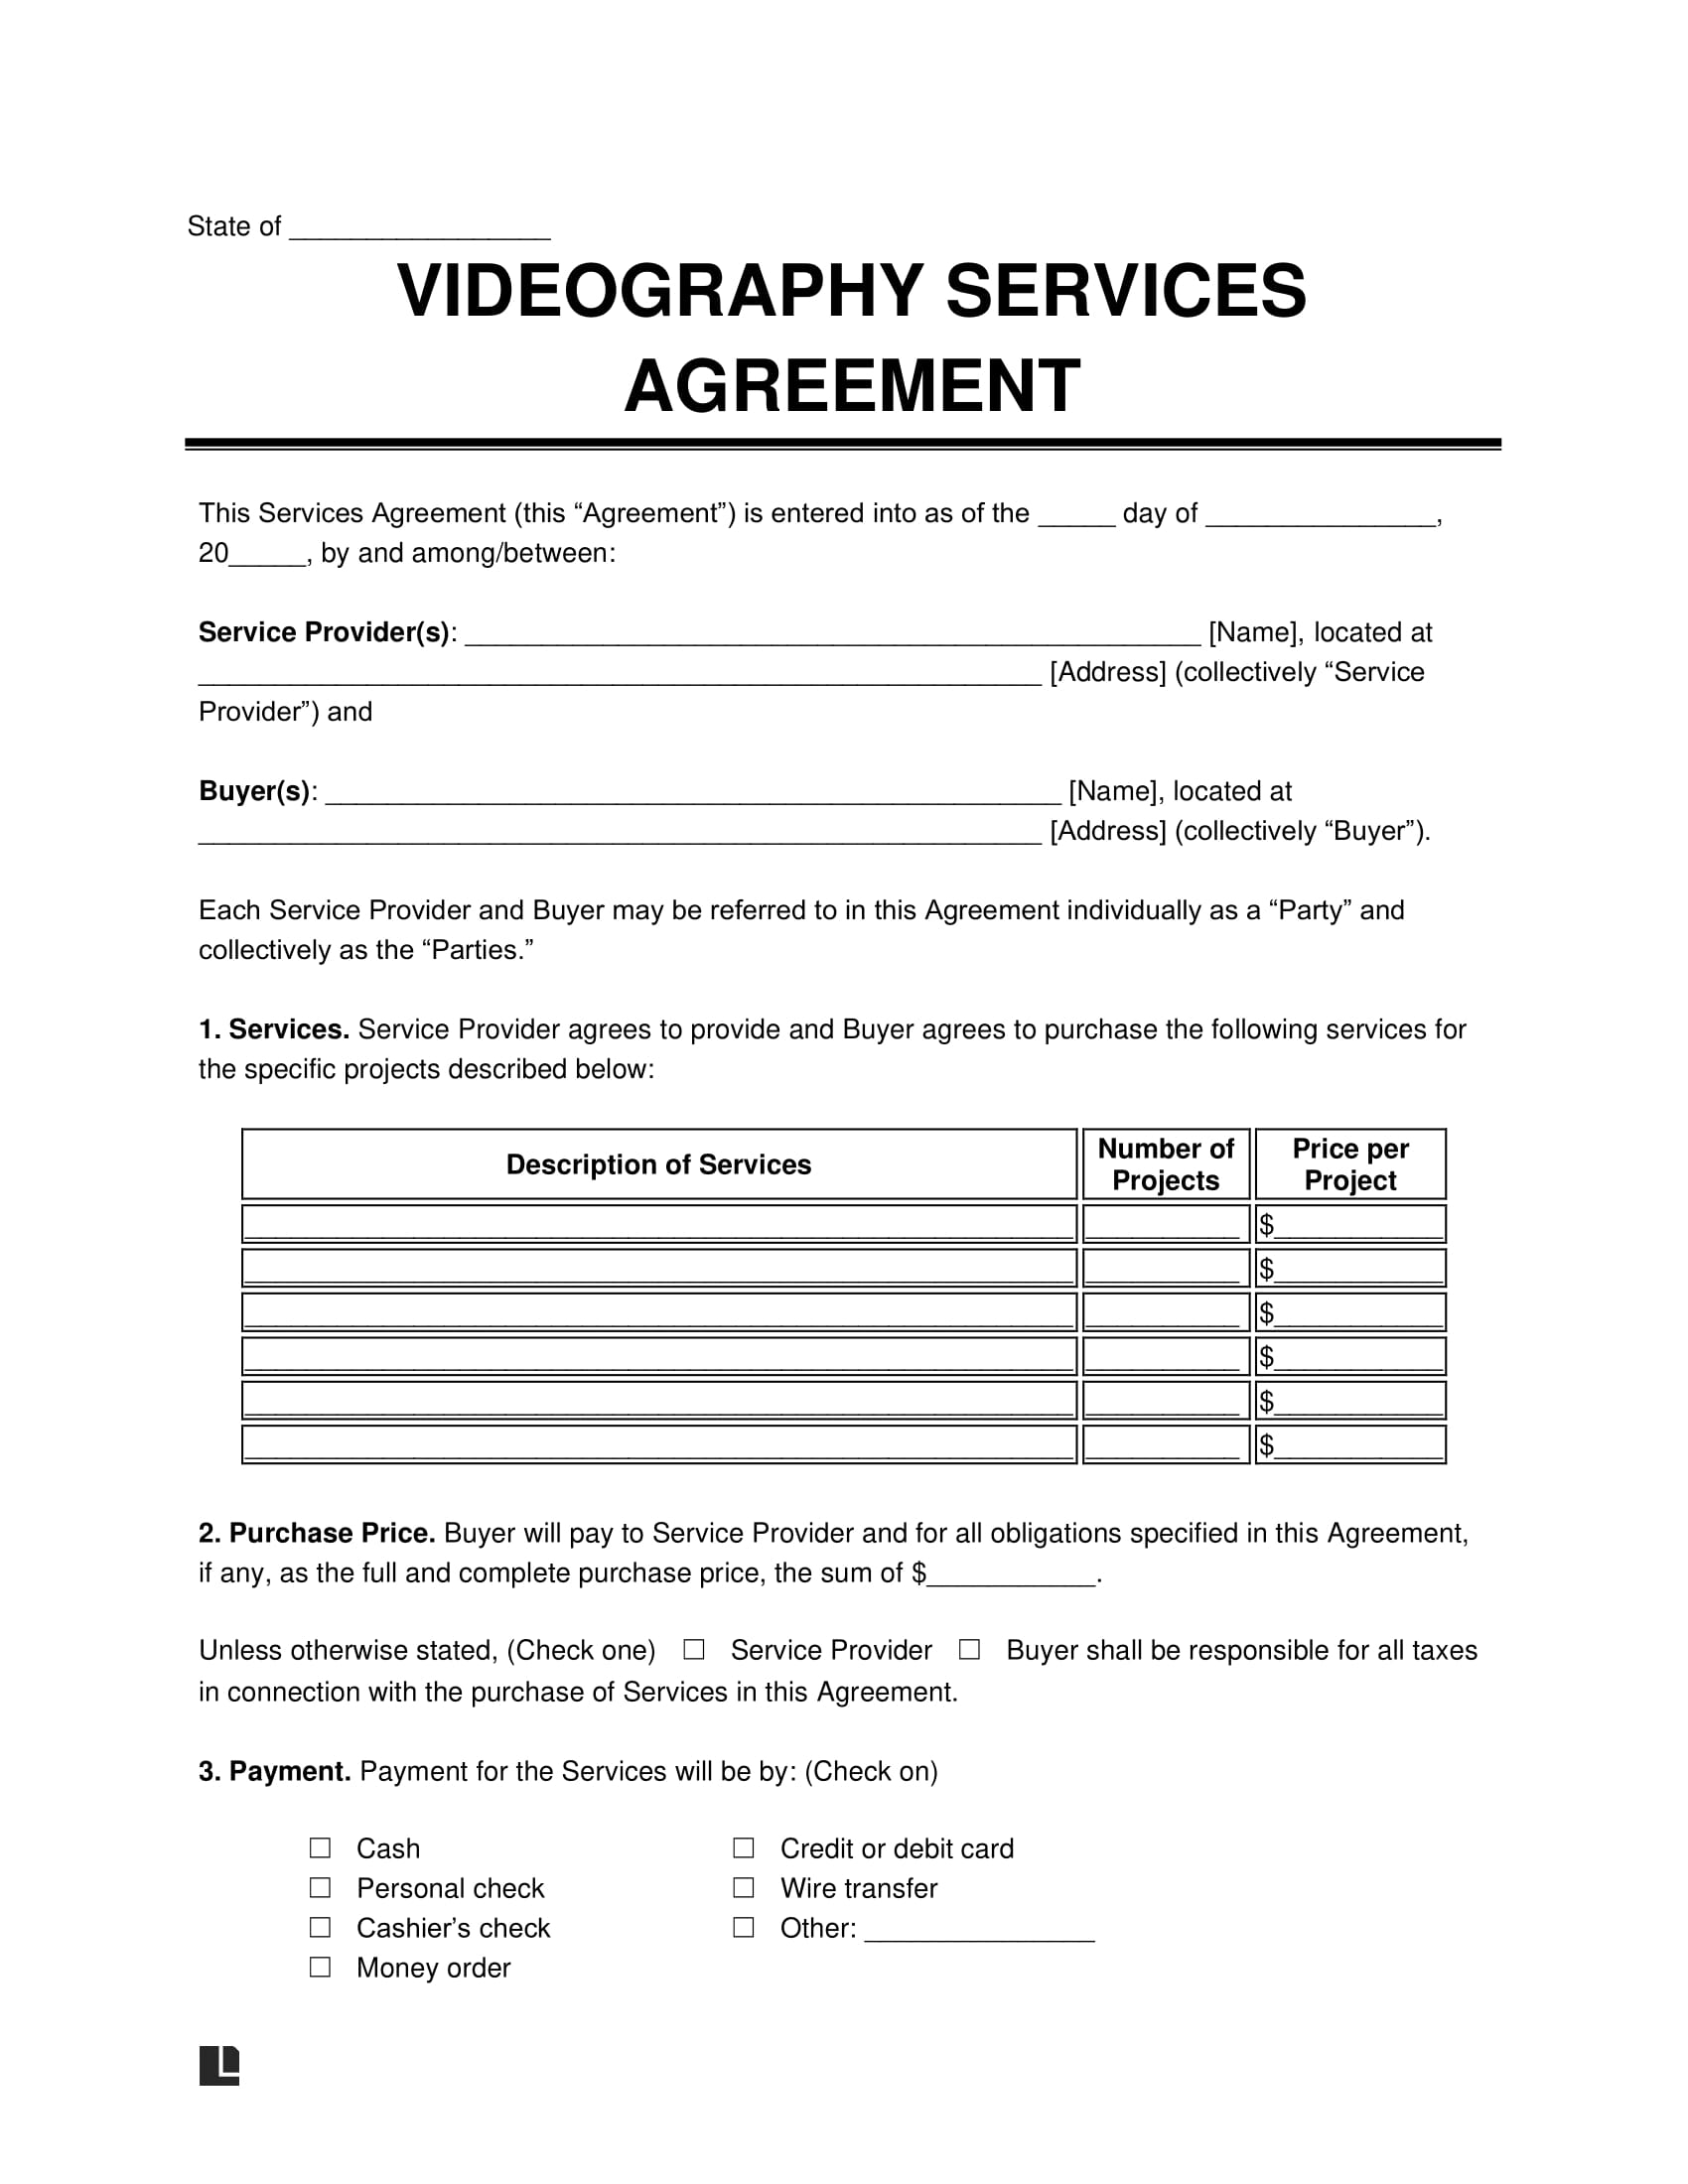 Videography contract screenshot